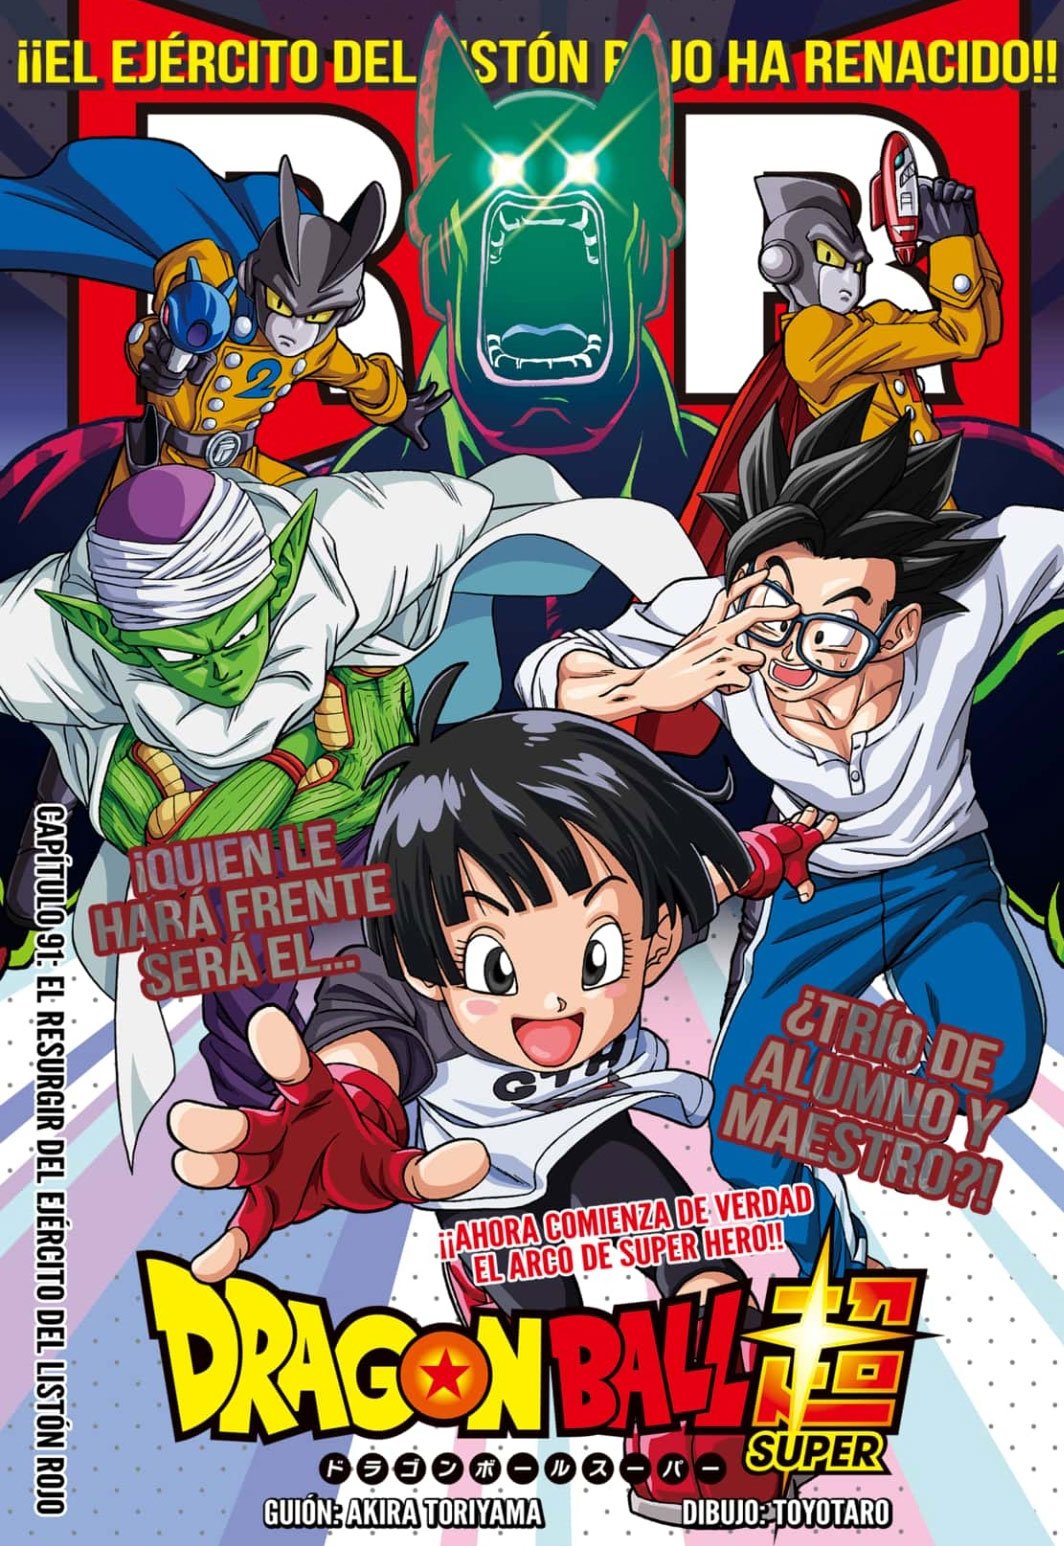 Manga 91 Dragon Ball Super - Review español 